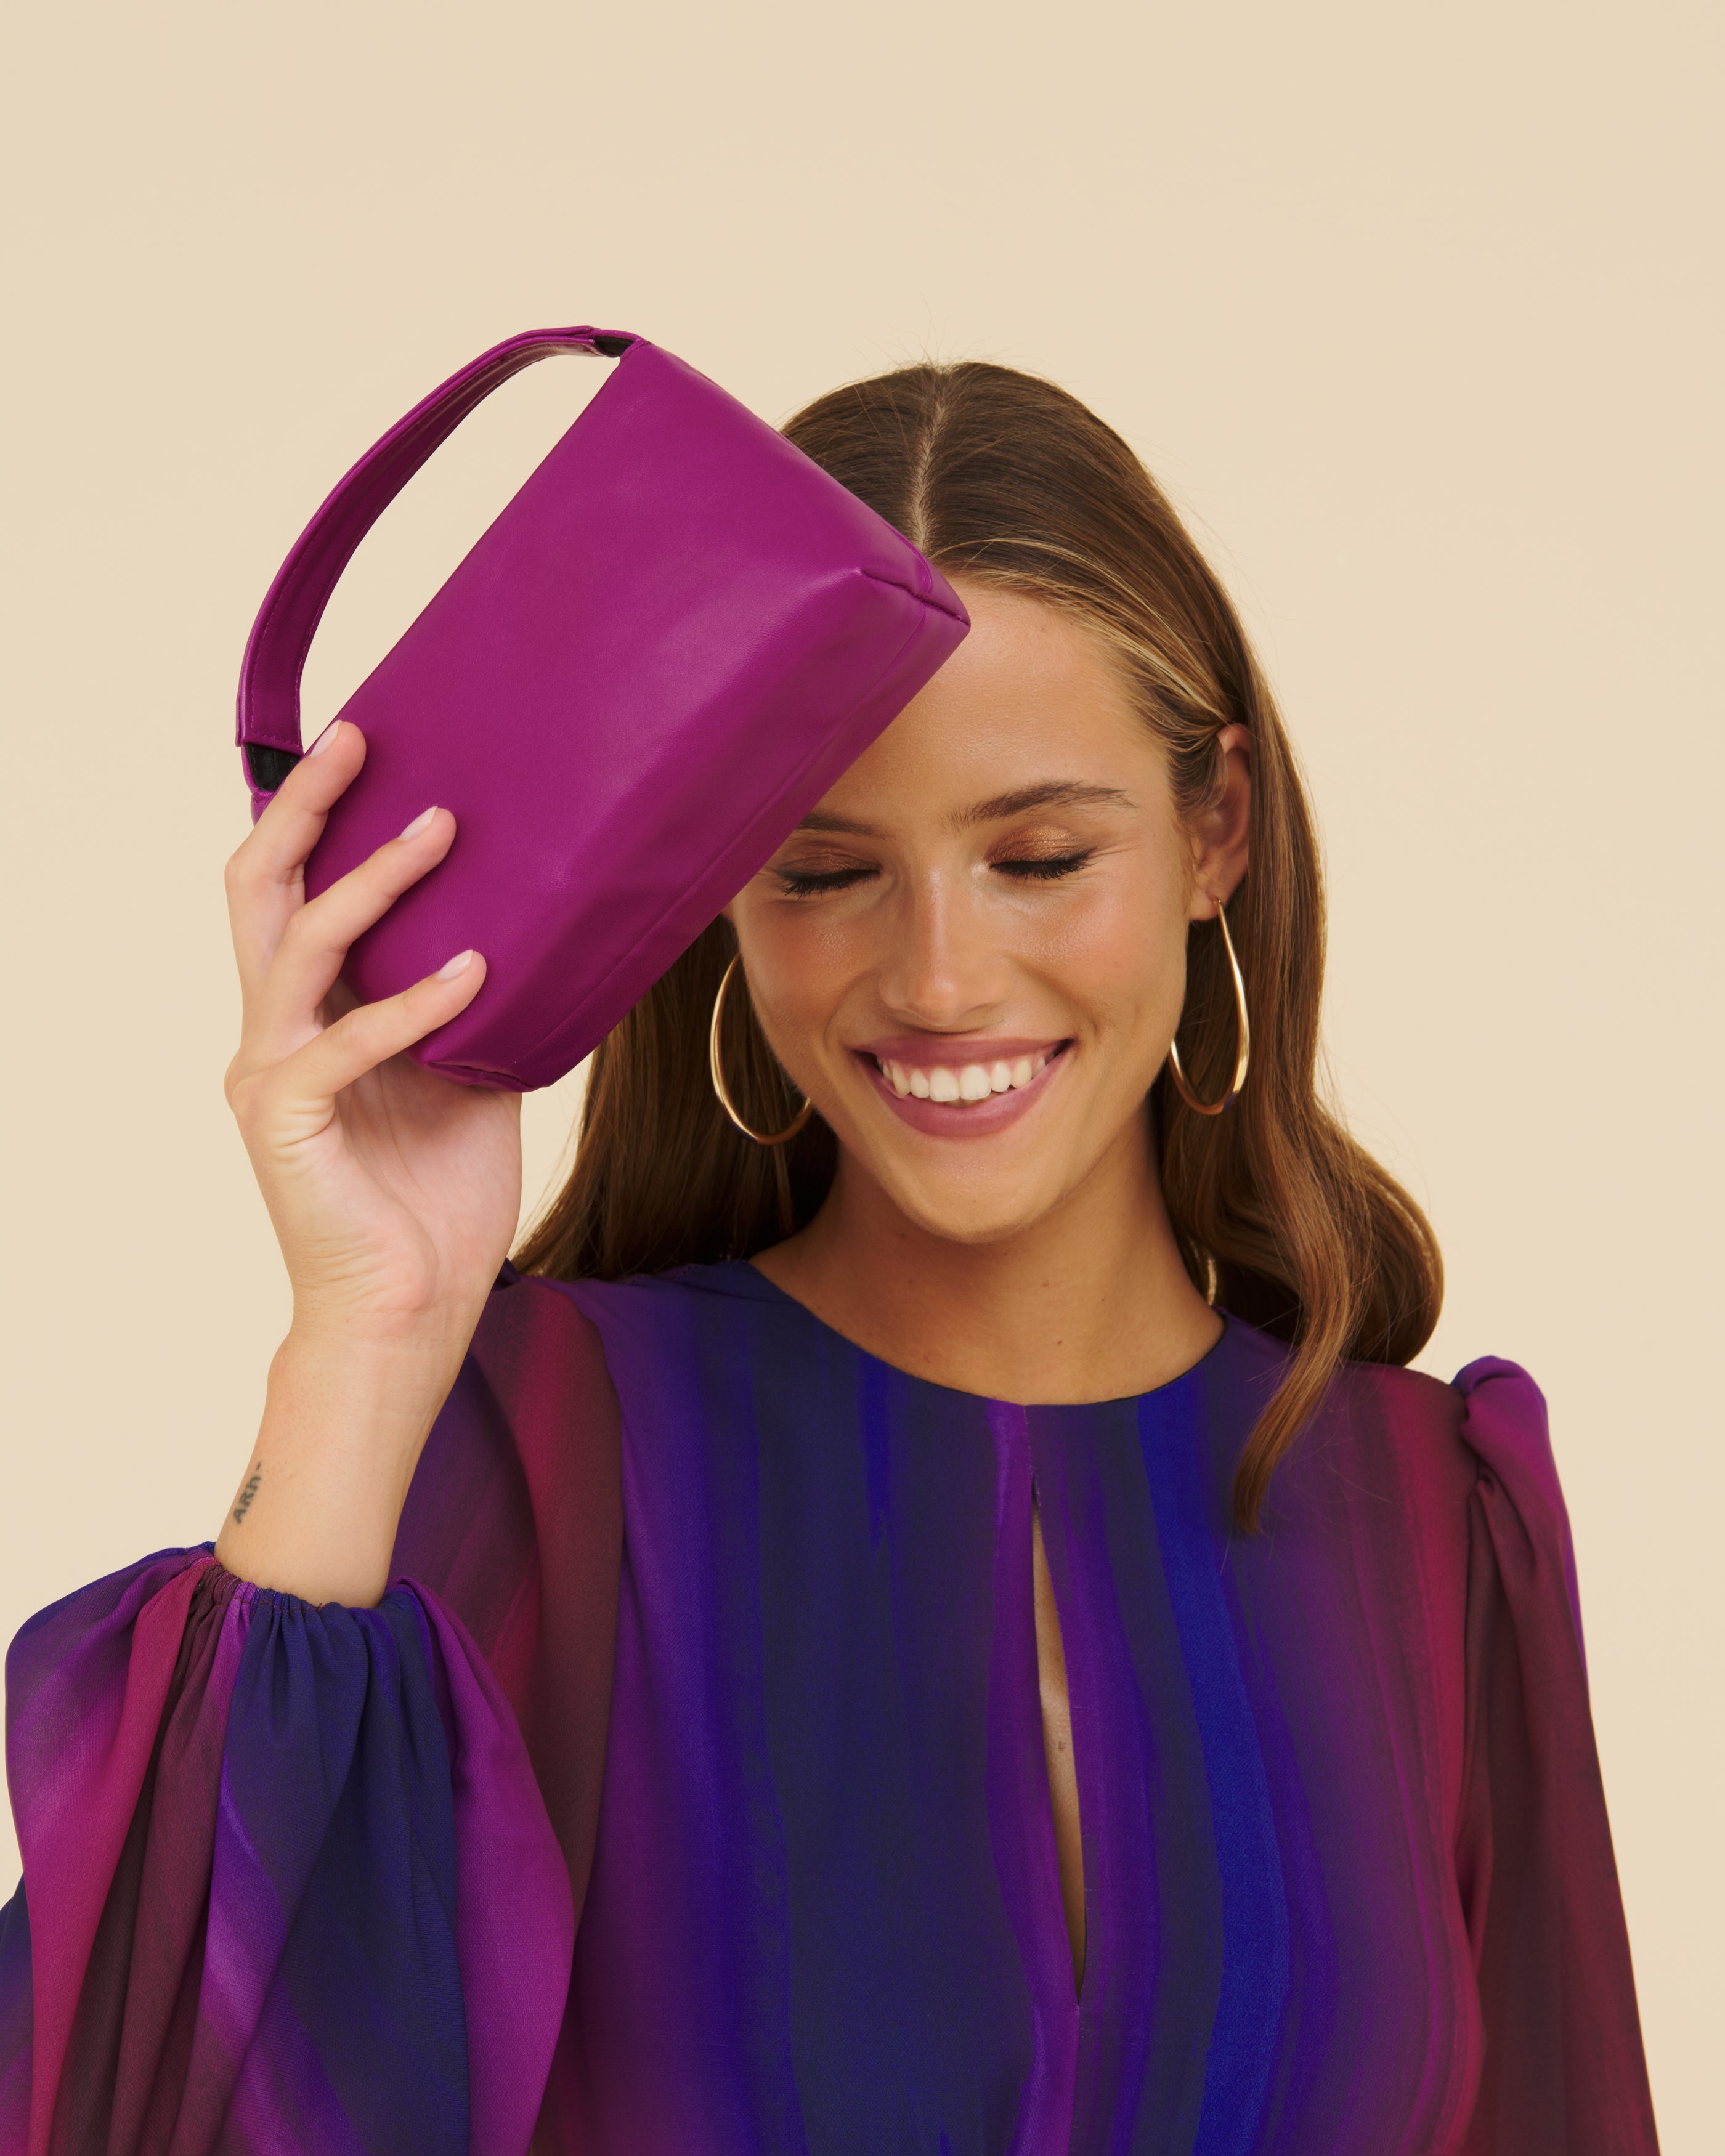 Sonora Purple Bag